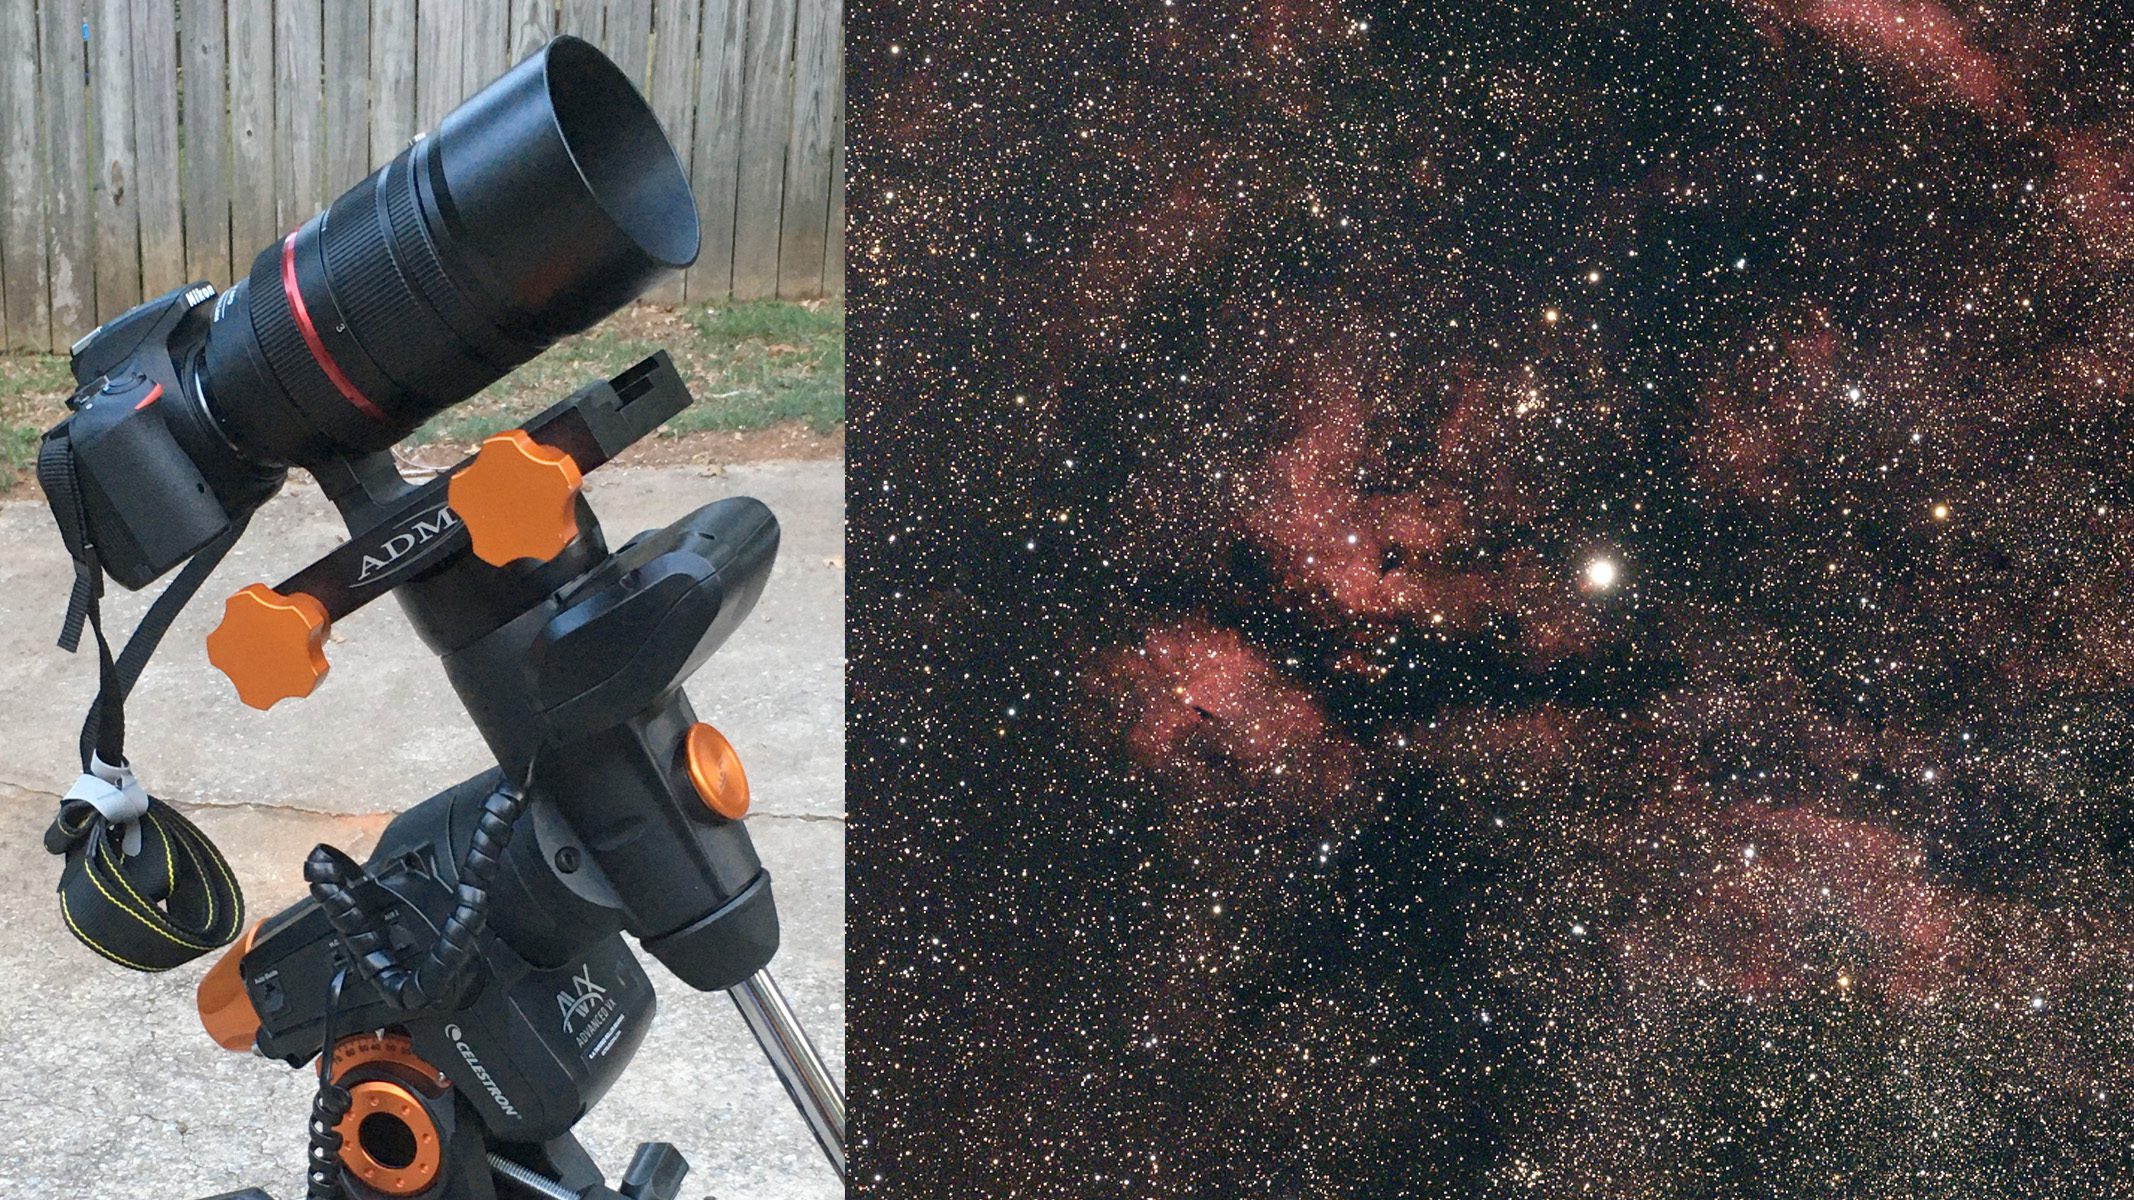 The nebula image has been configured next to the telescope setup